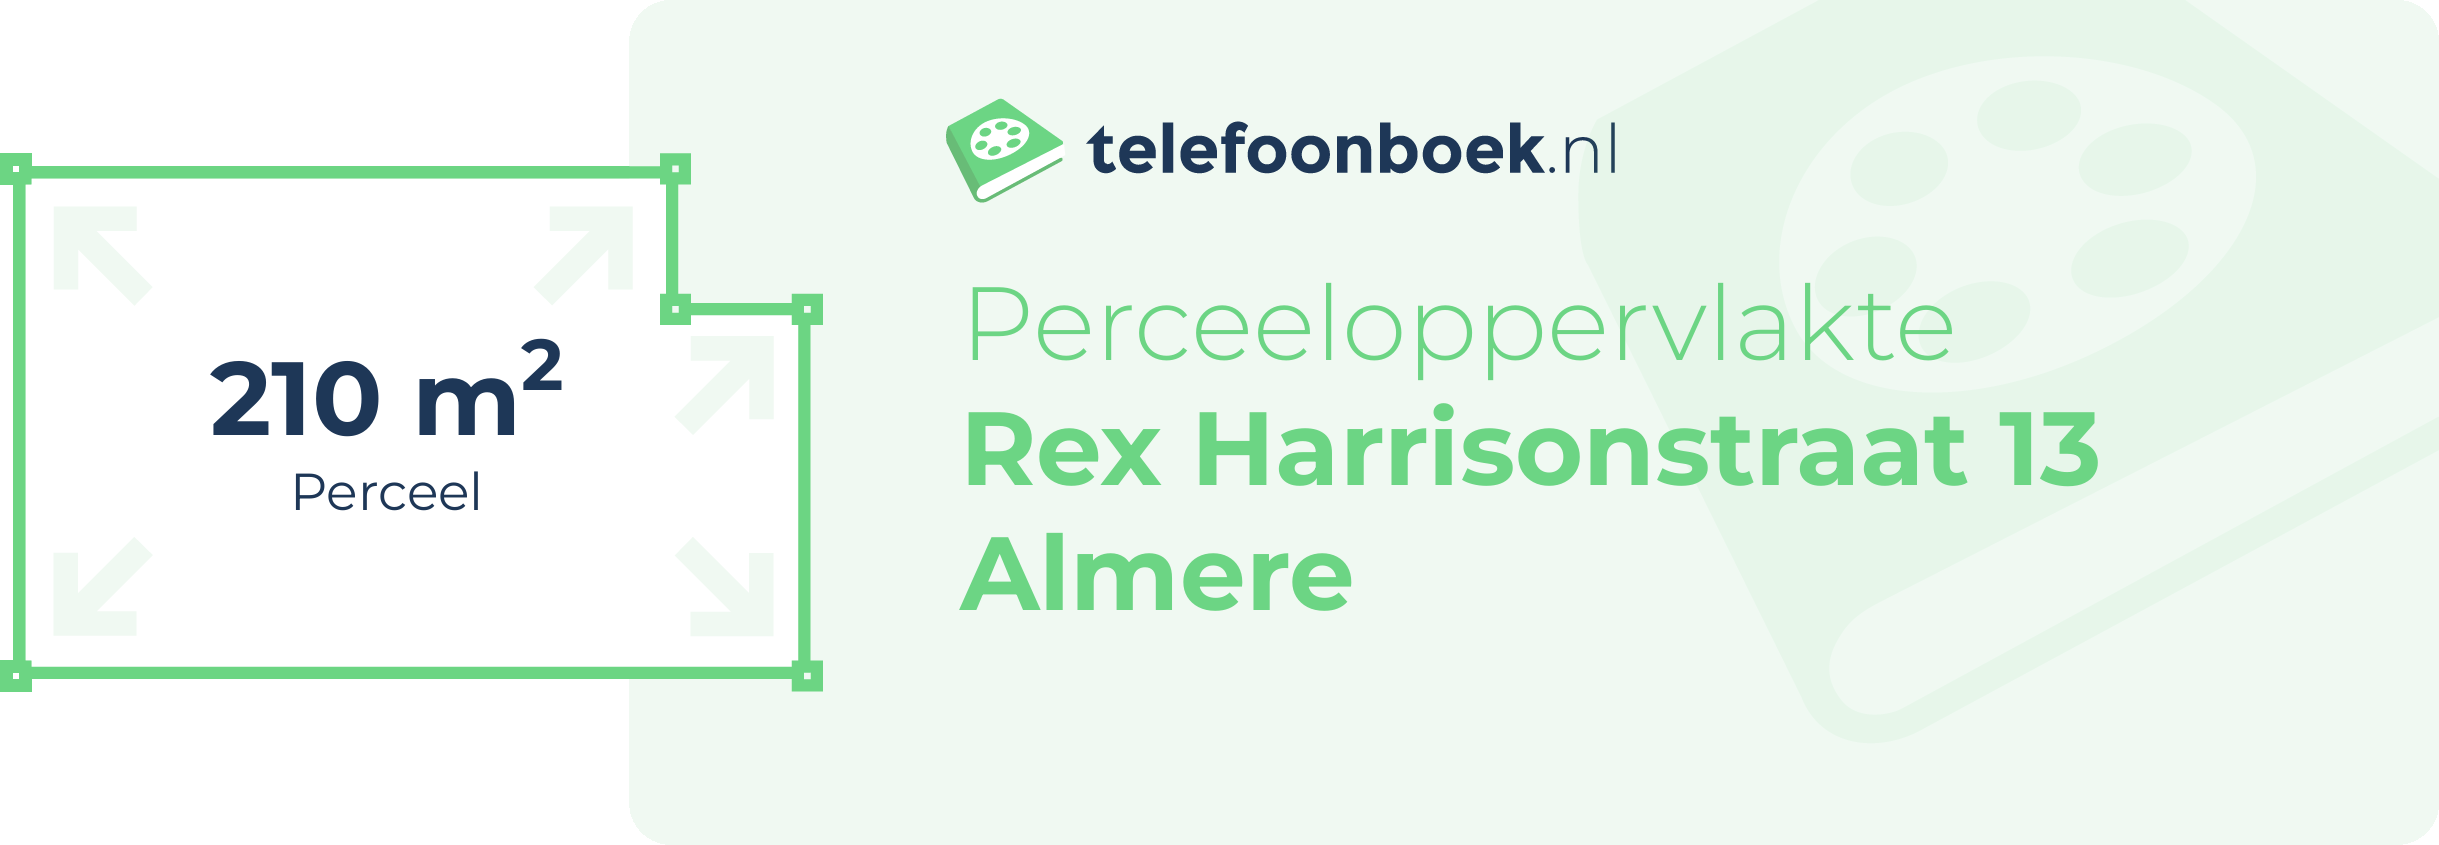 Perceeloppervlakte Rex Harrisonstraat 13 Almere